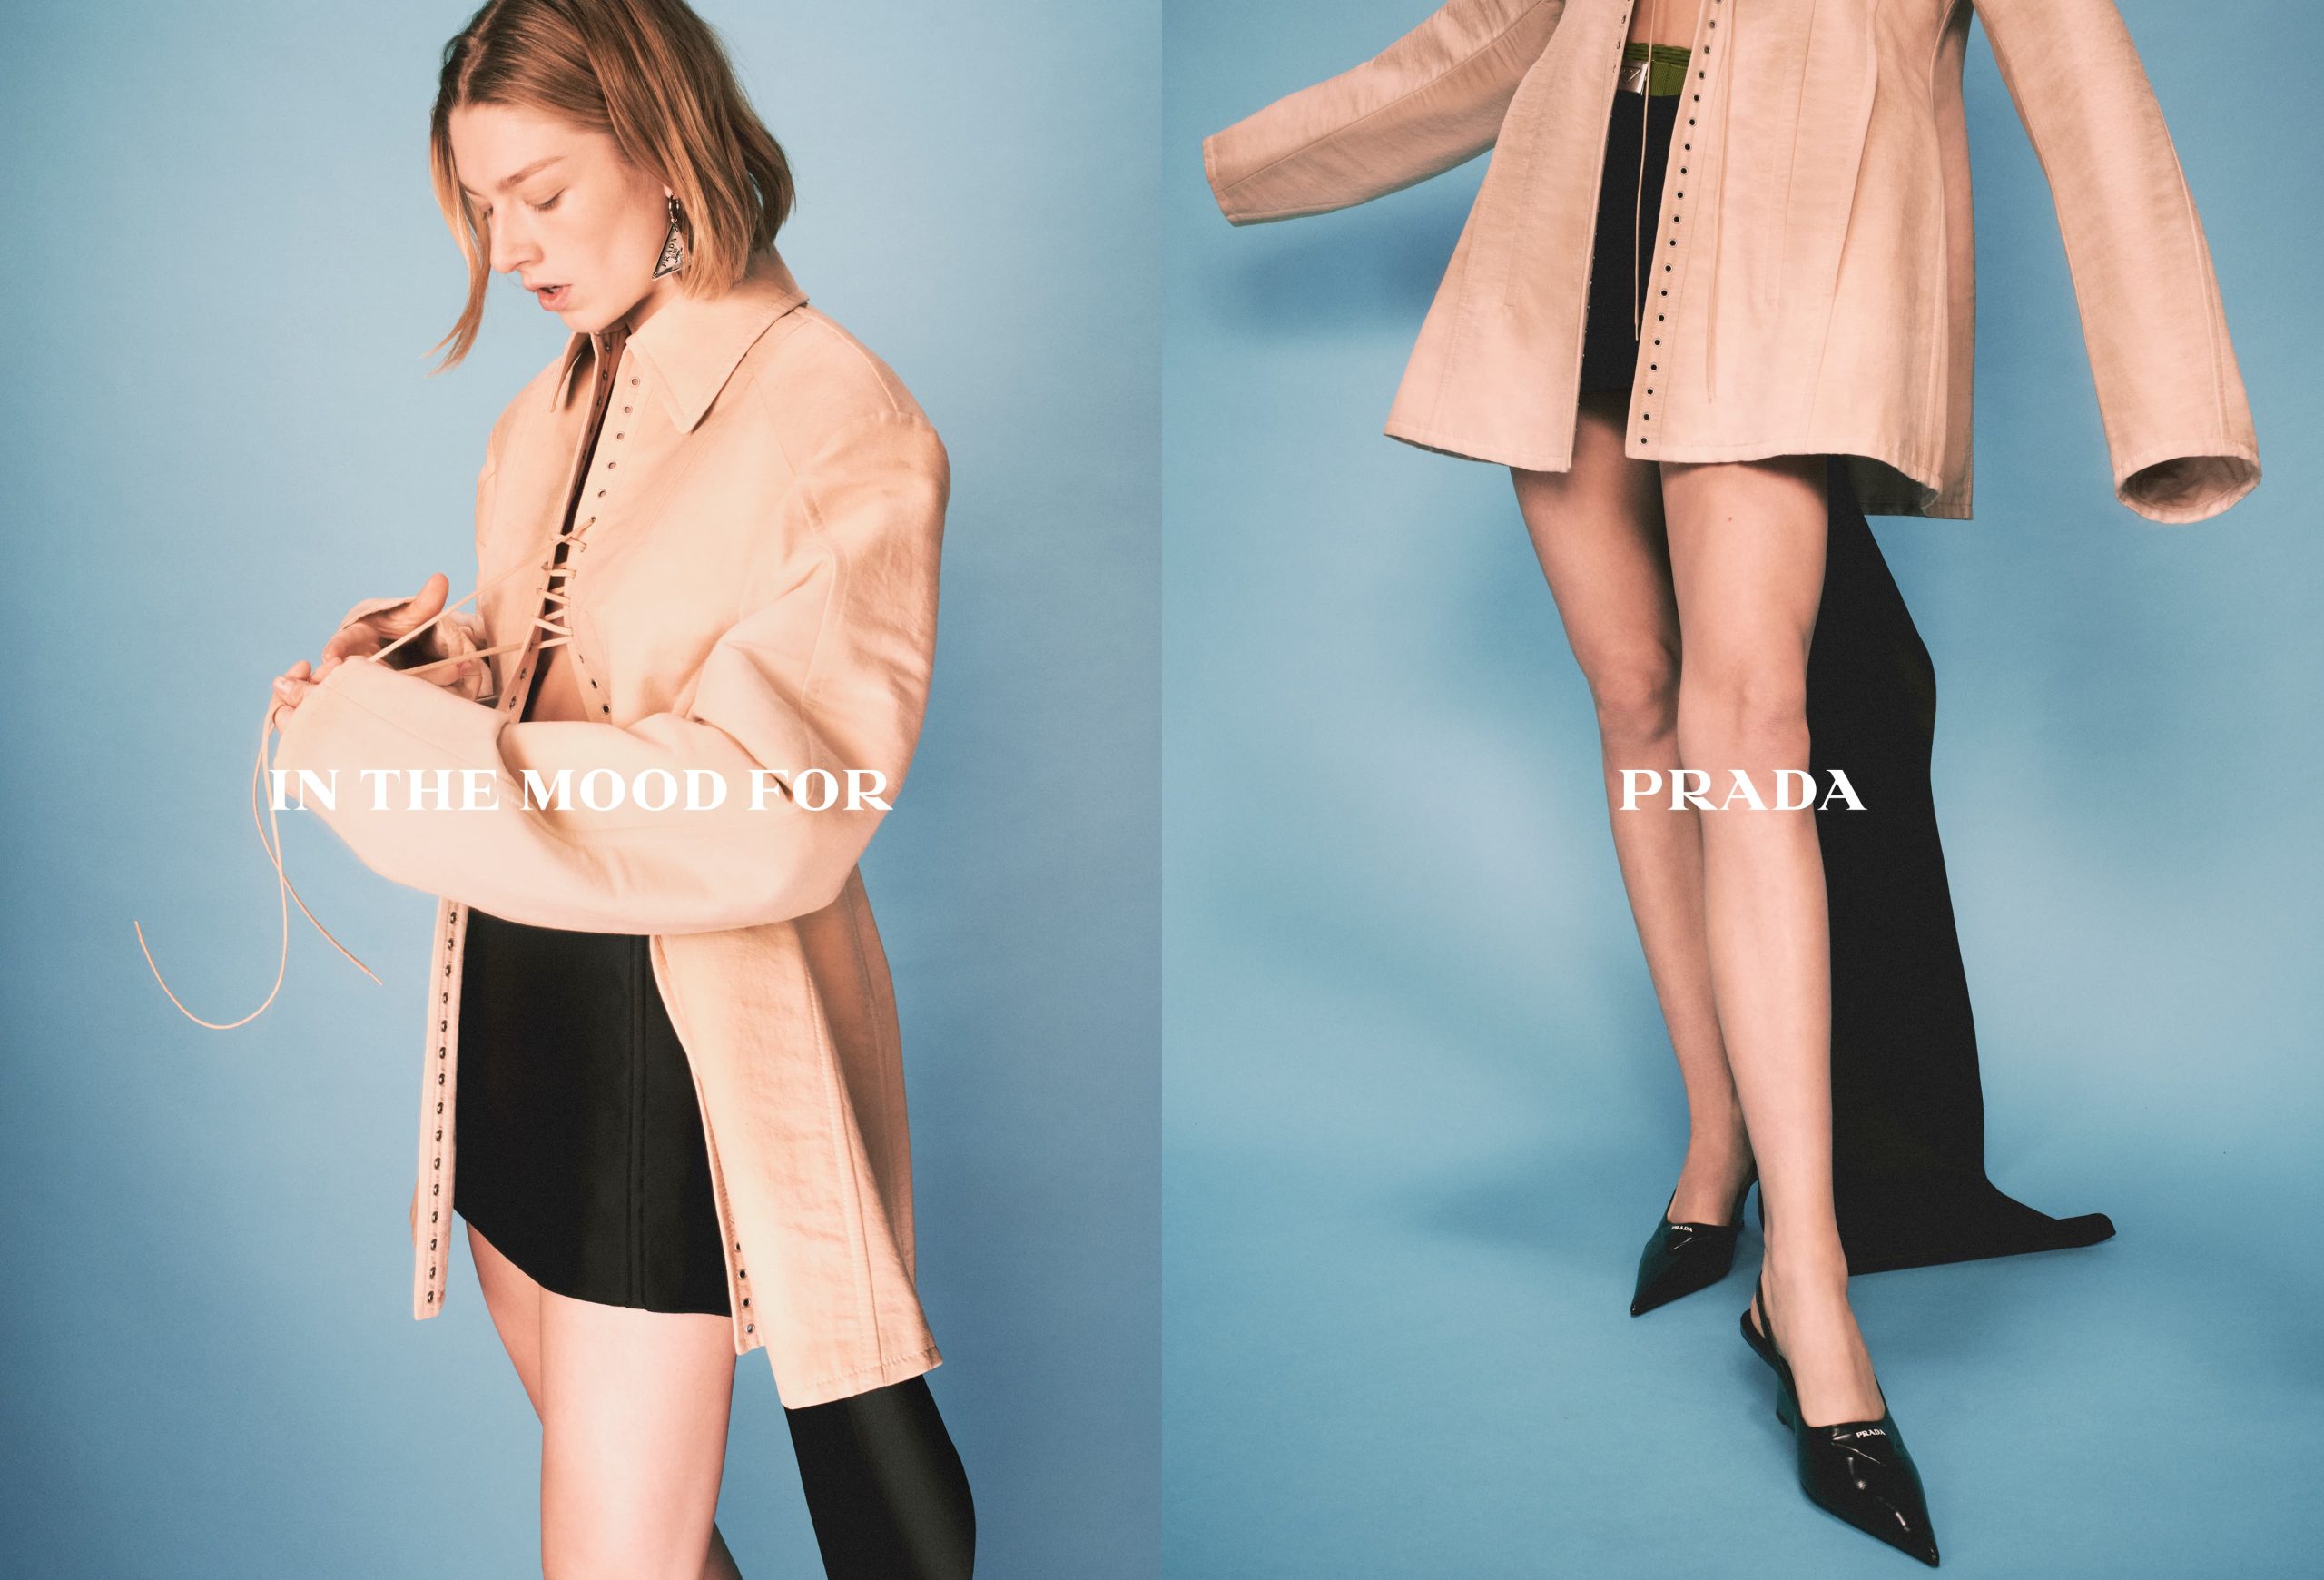 Prada Womenswear Spring/Summer 2022 Advertising Campaign